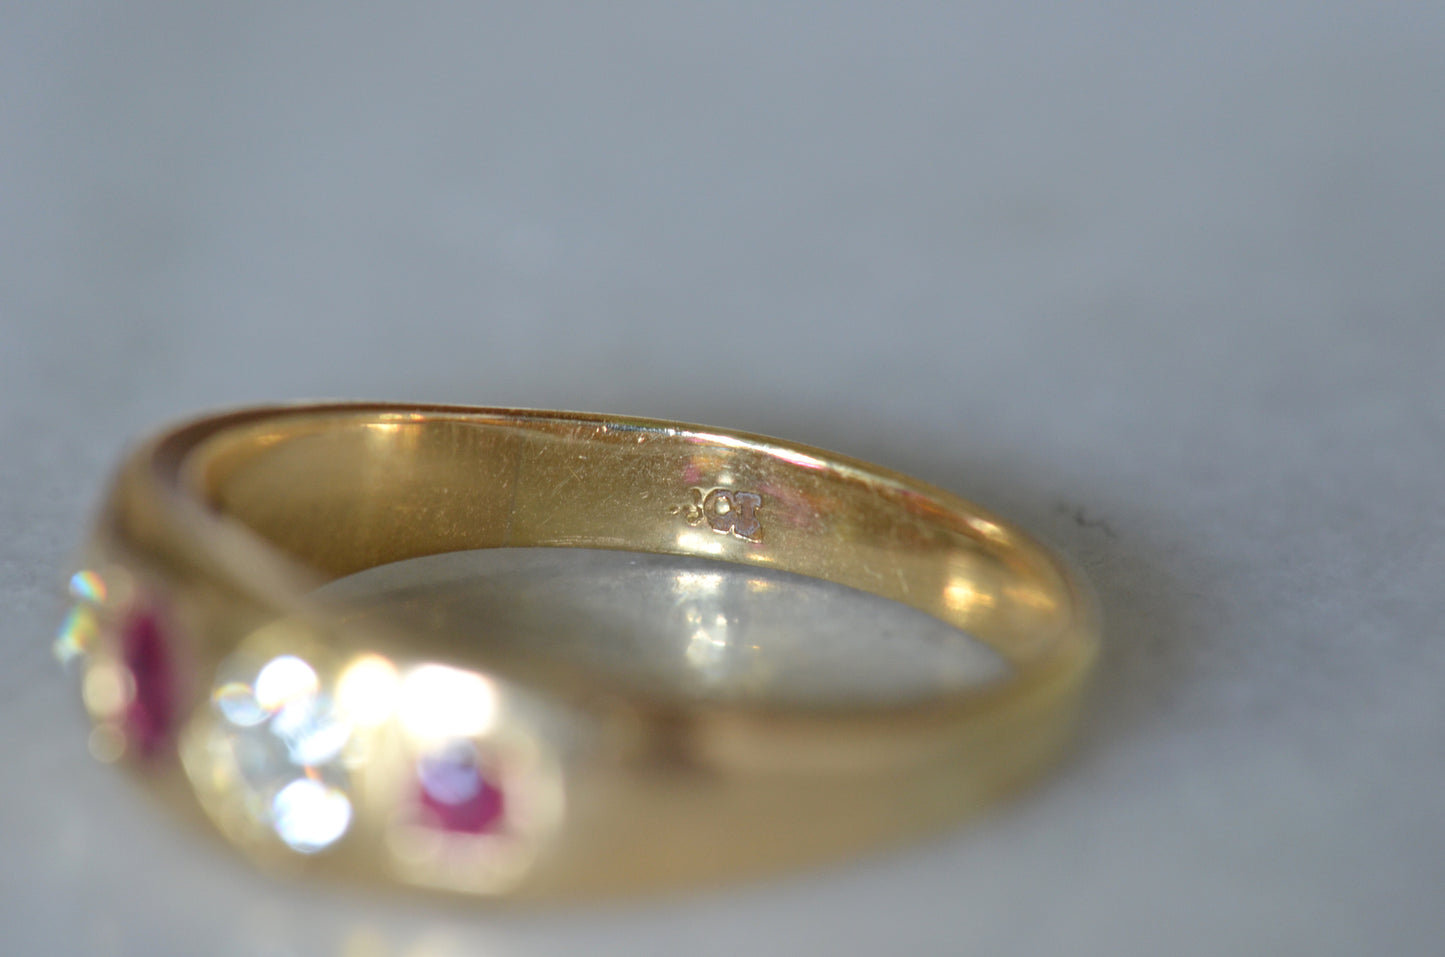 Ravishing Ruby and Diamond Victorian Ring